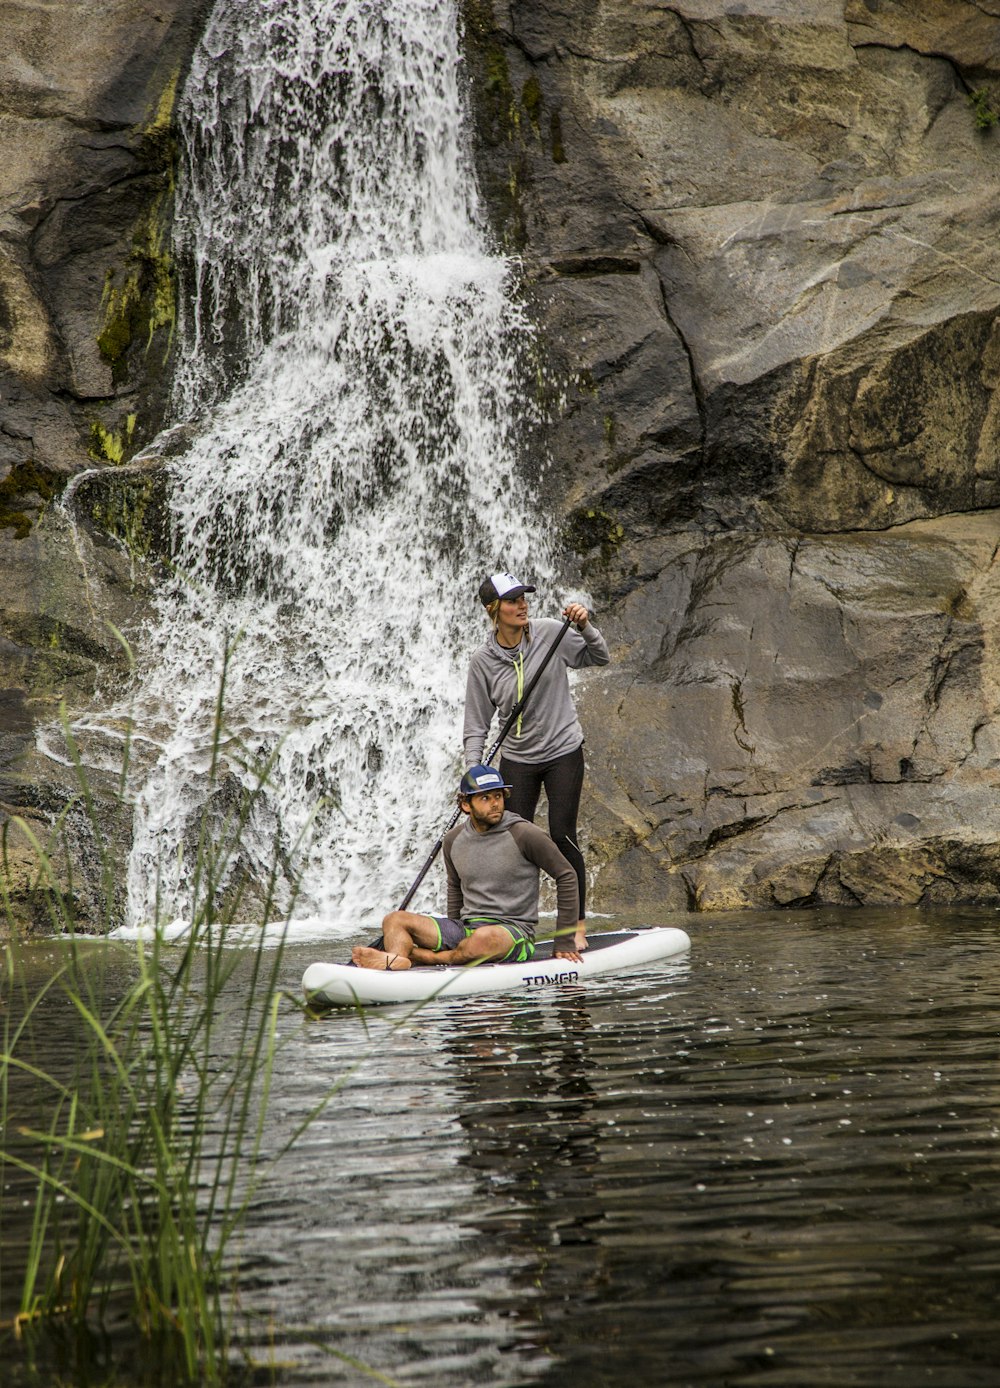 man in gray shirt and blue shorts riding yellow kayak on river during daytime